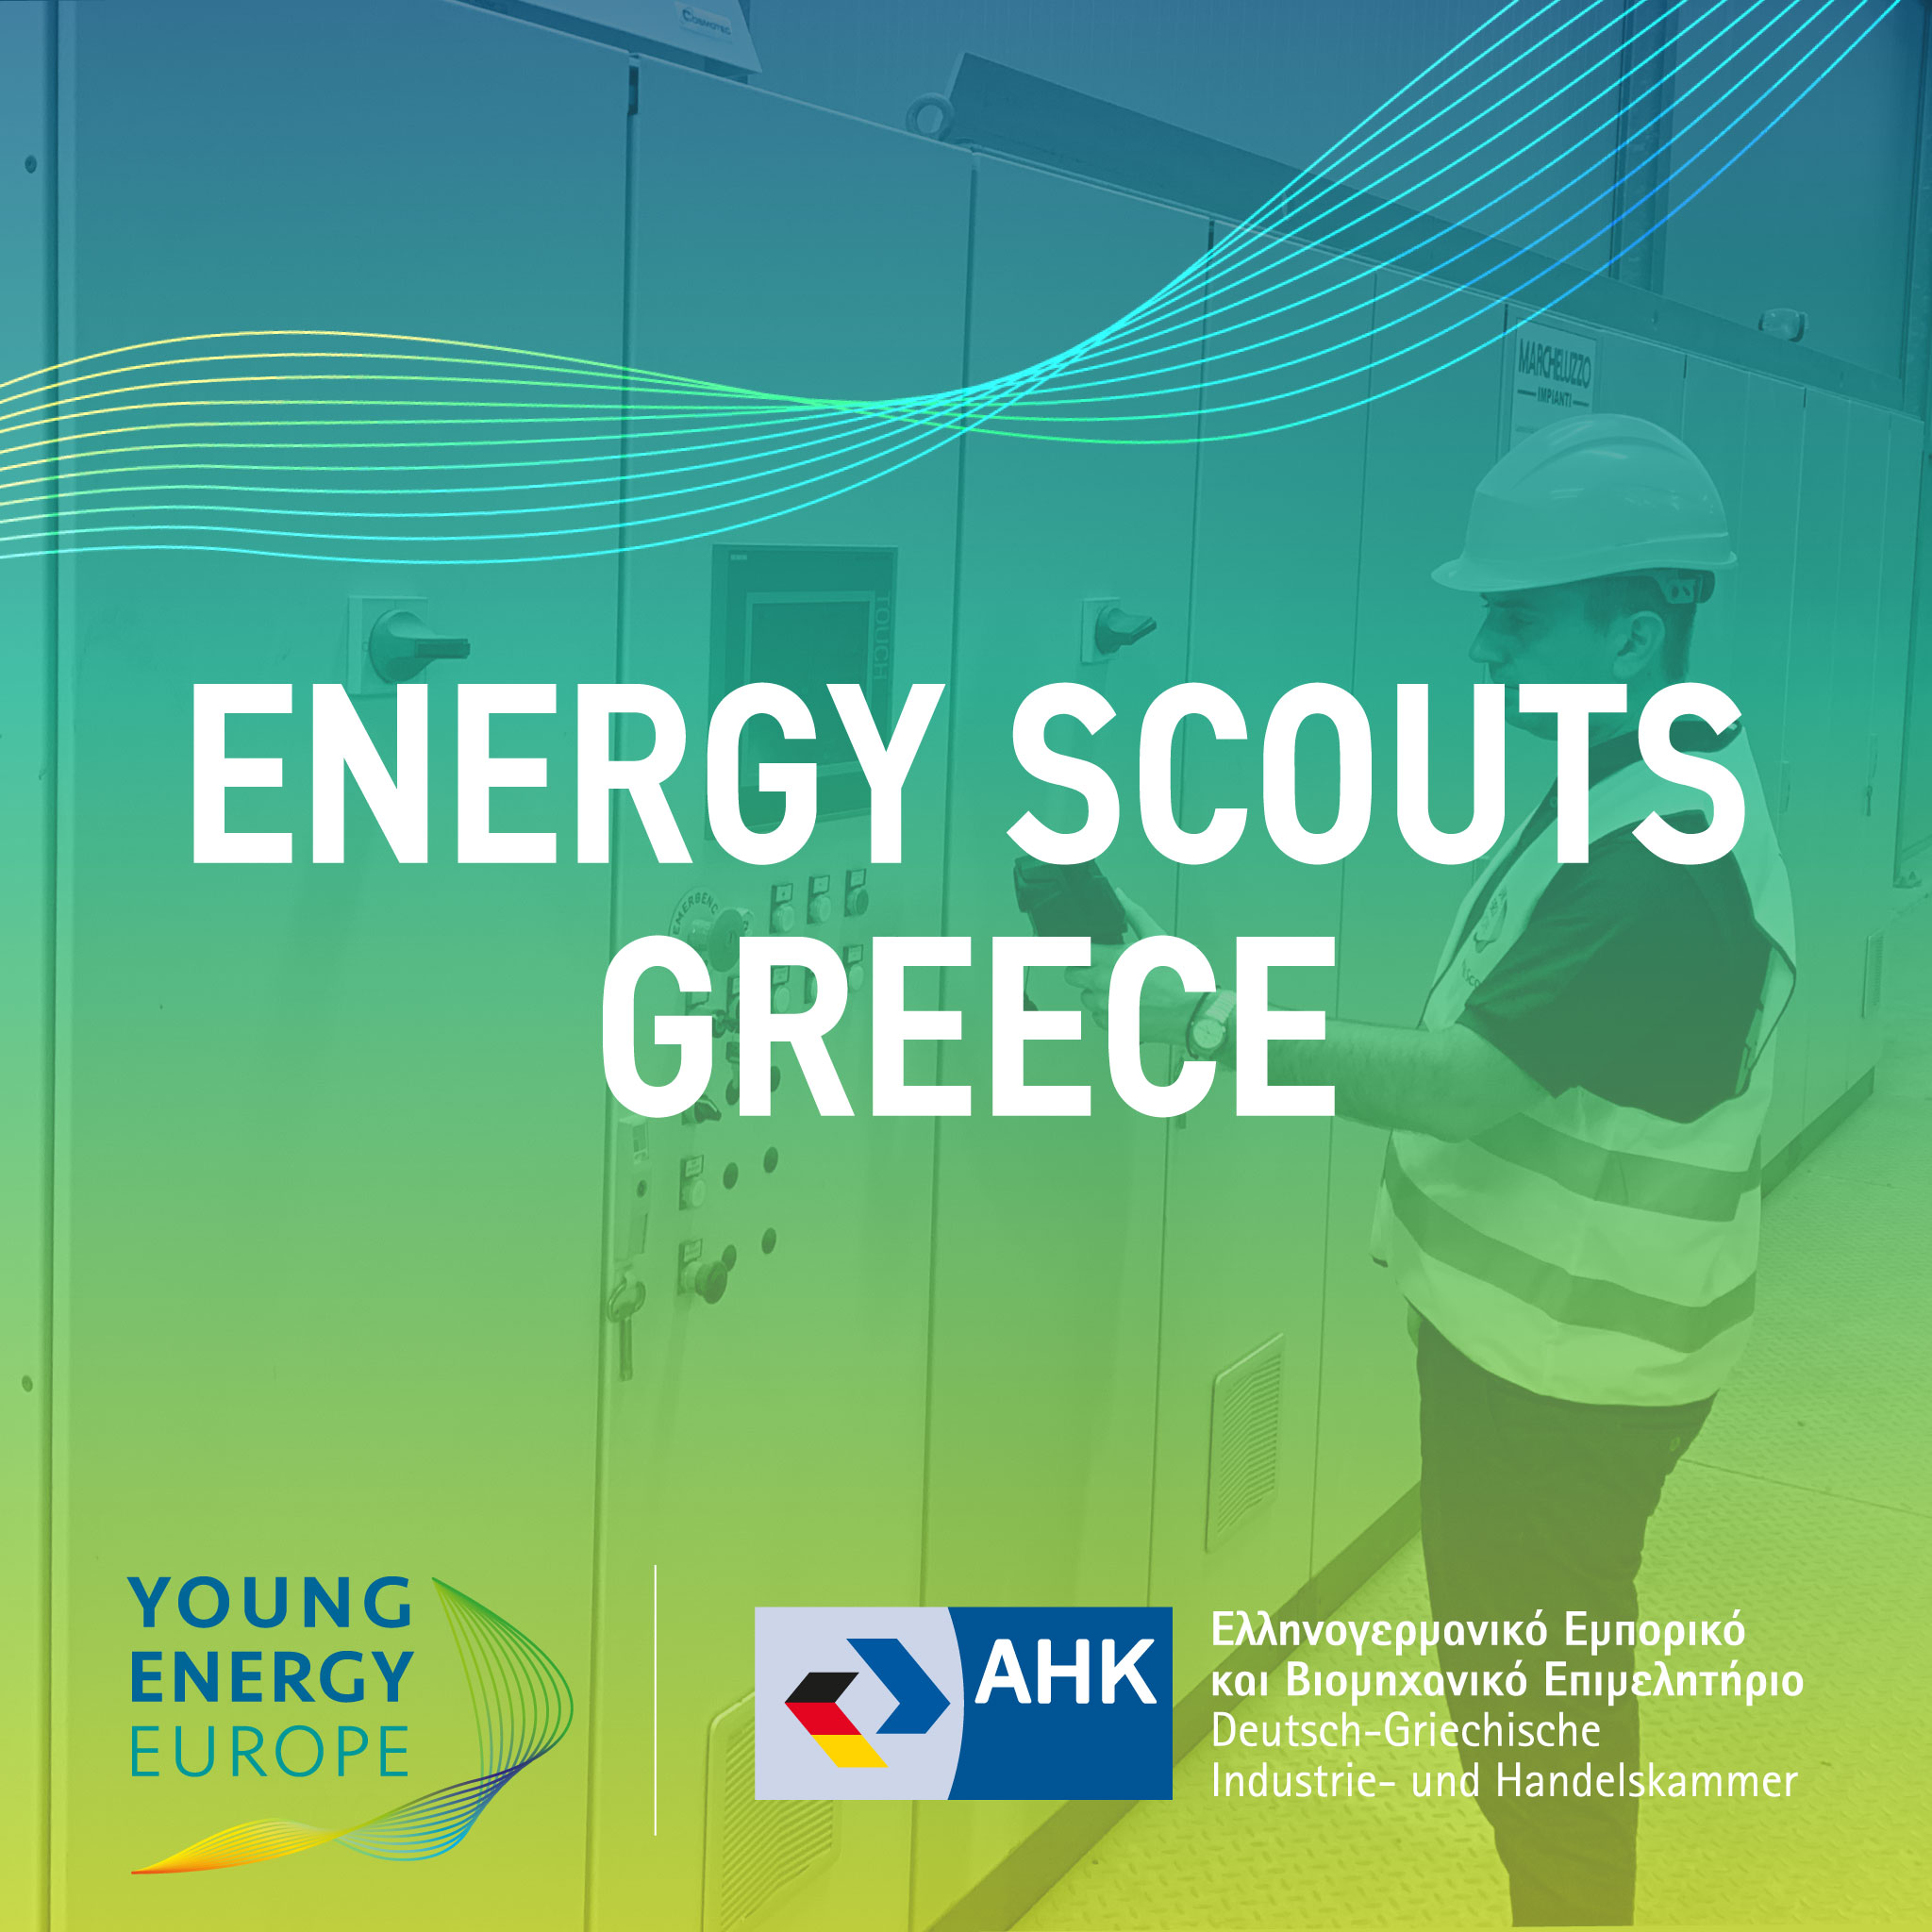 Young Energy Europe 2.0: Έως 30 Σεπτεμβρίου οι εγγραφές για το 4ήμερο διαδικτυακό σεμινάριο εξοικονόμησης ενέργειας και πόρων, “Energy Scouts”